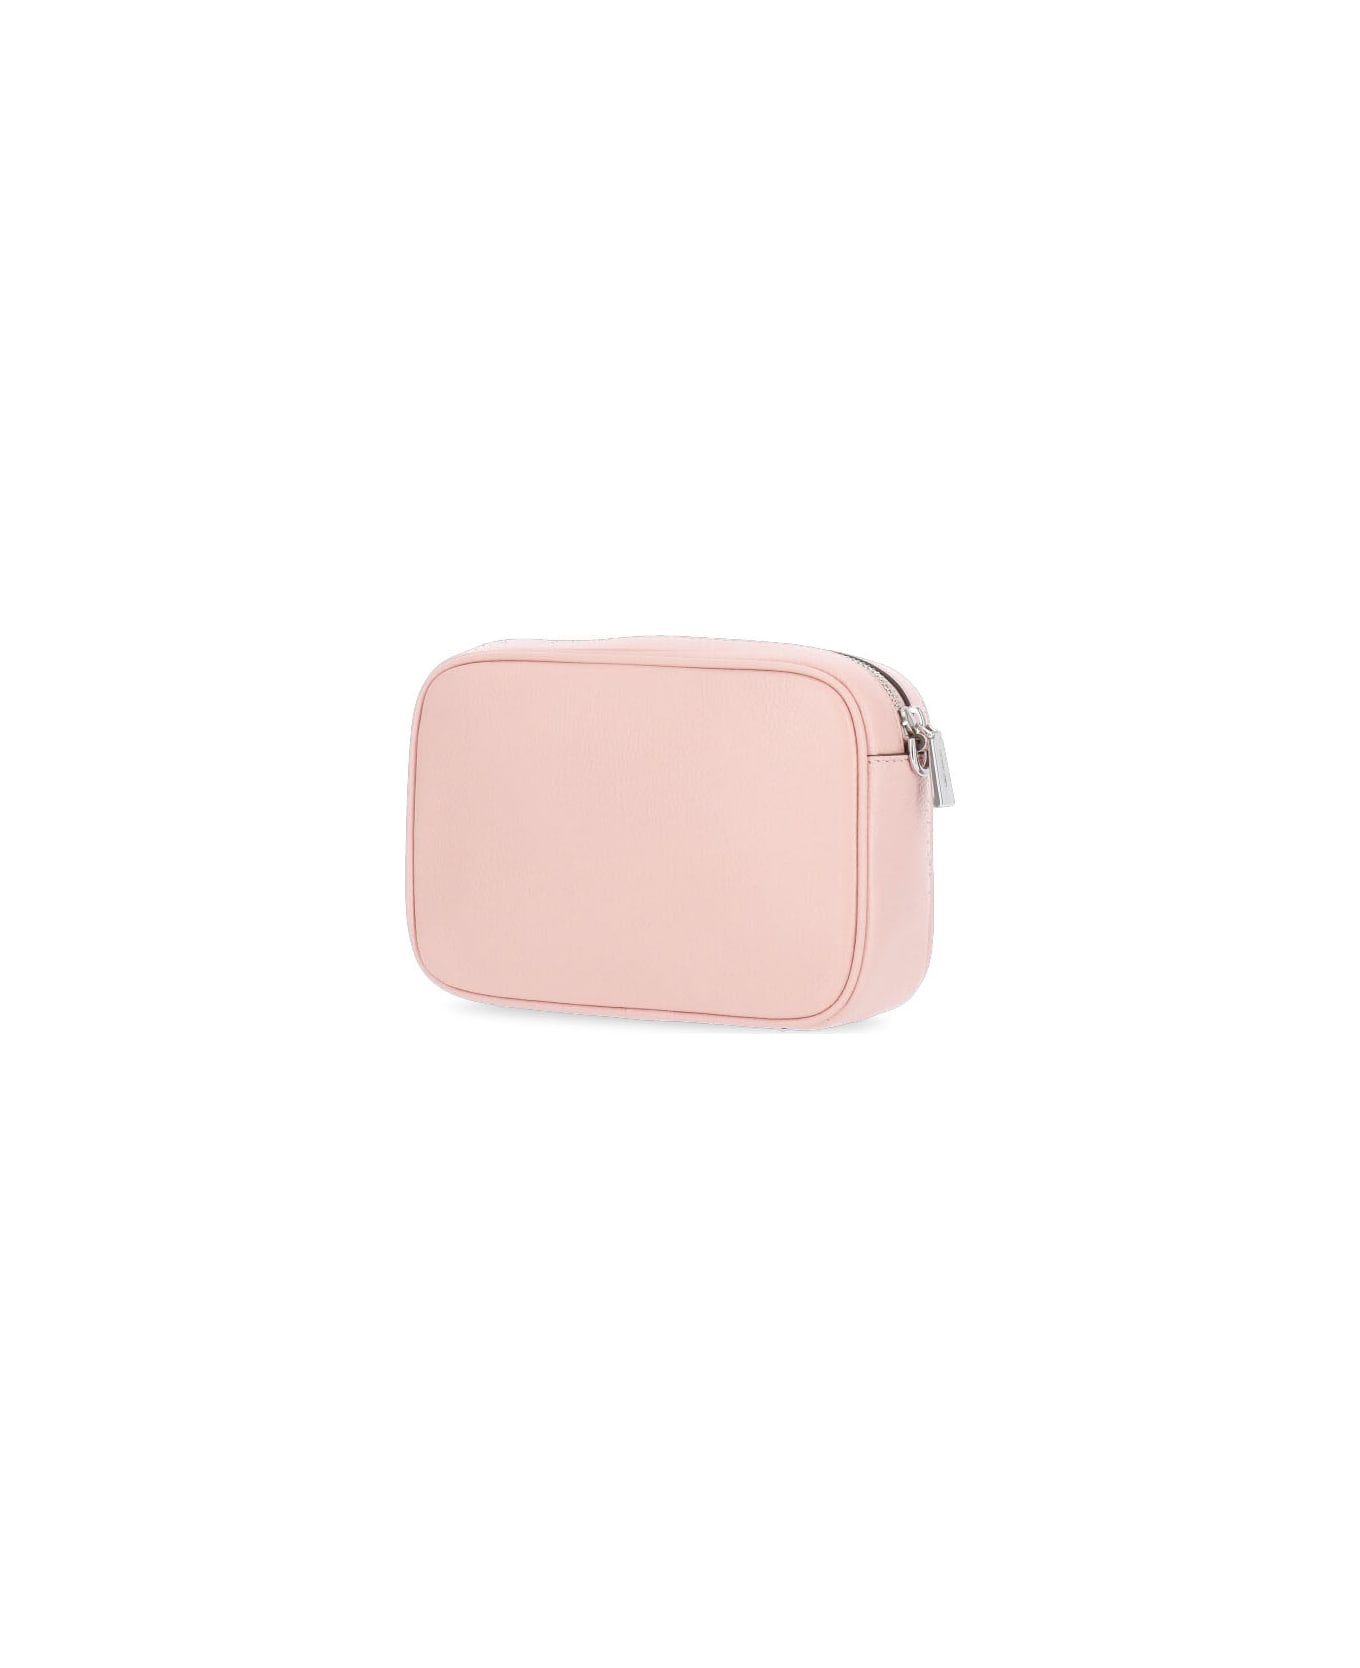 Michael Kors Ginny Leather Crossbody Bag - Pink